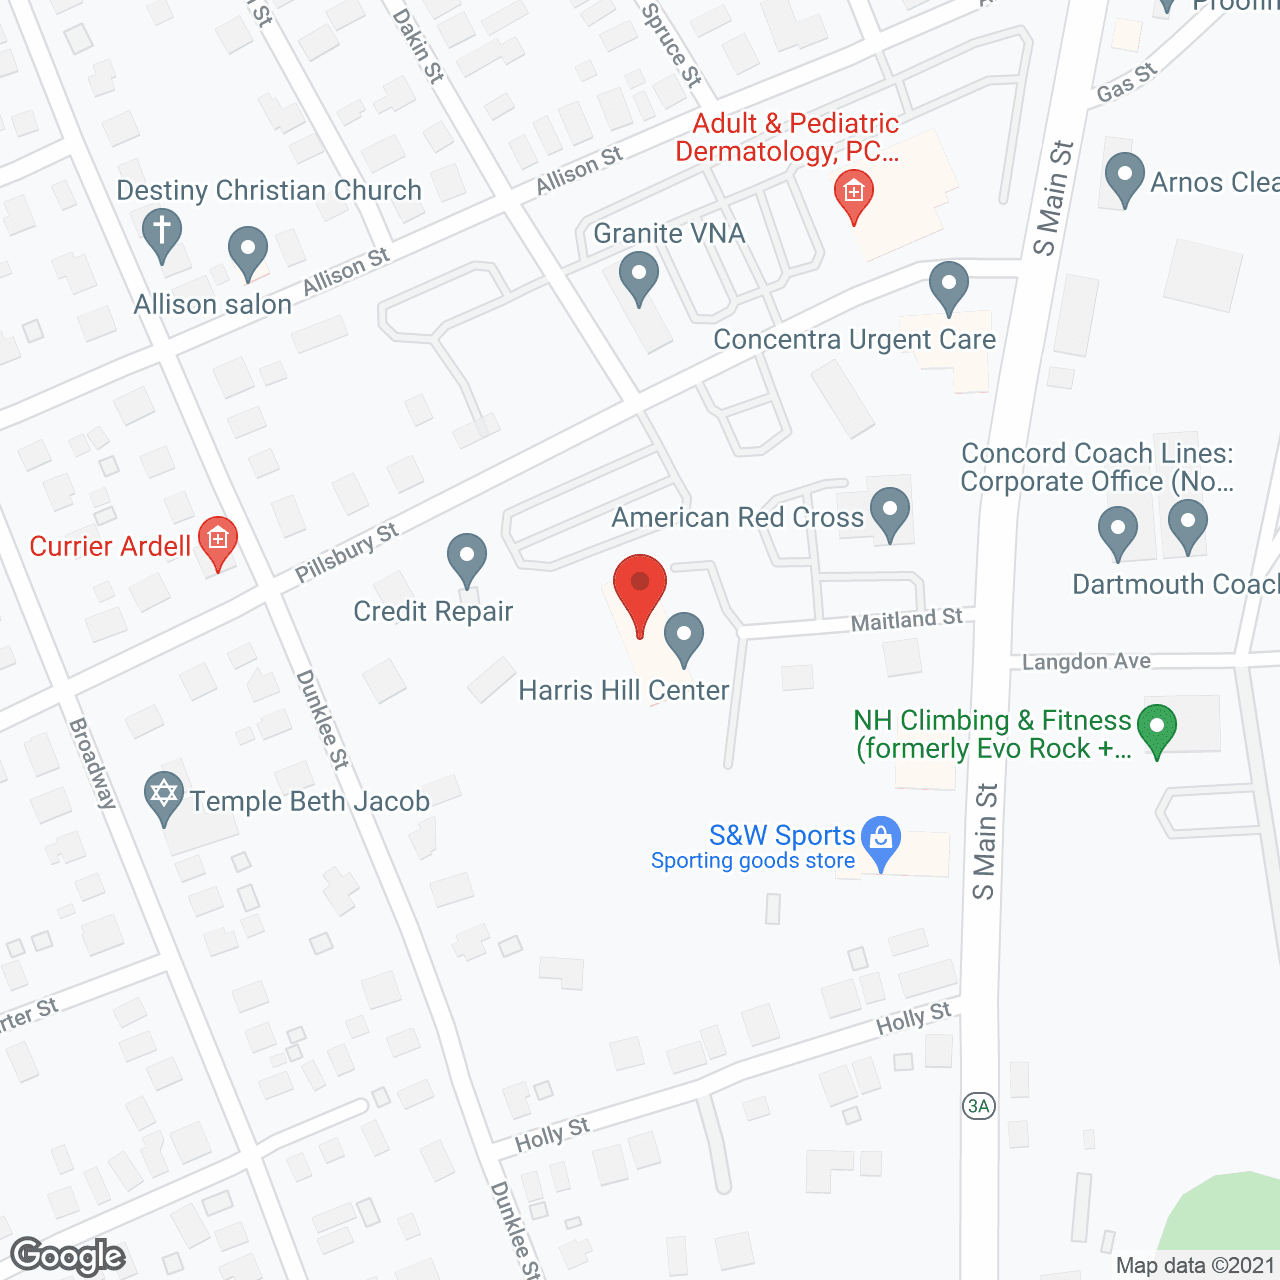 Harris Hill Center in google map